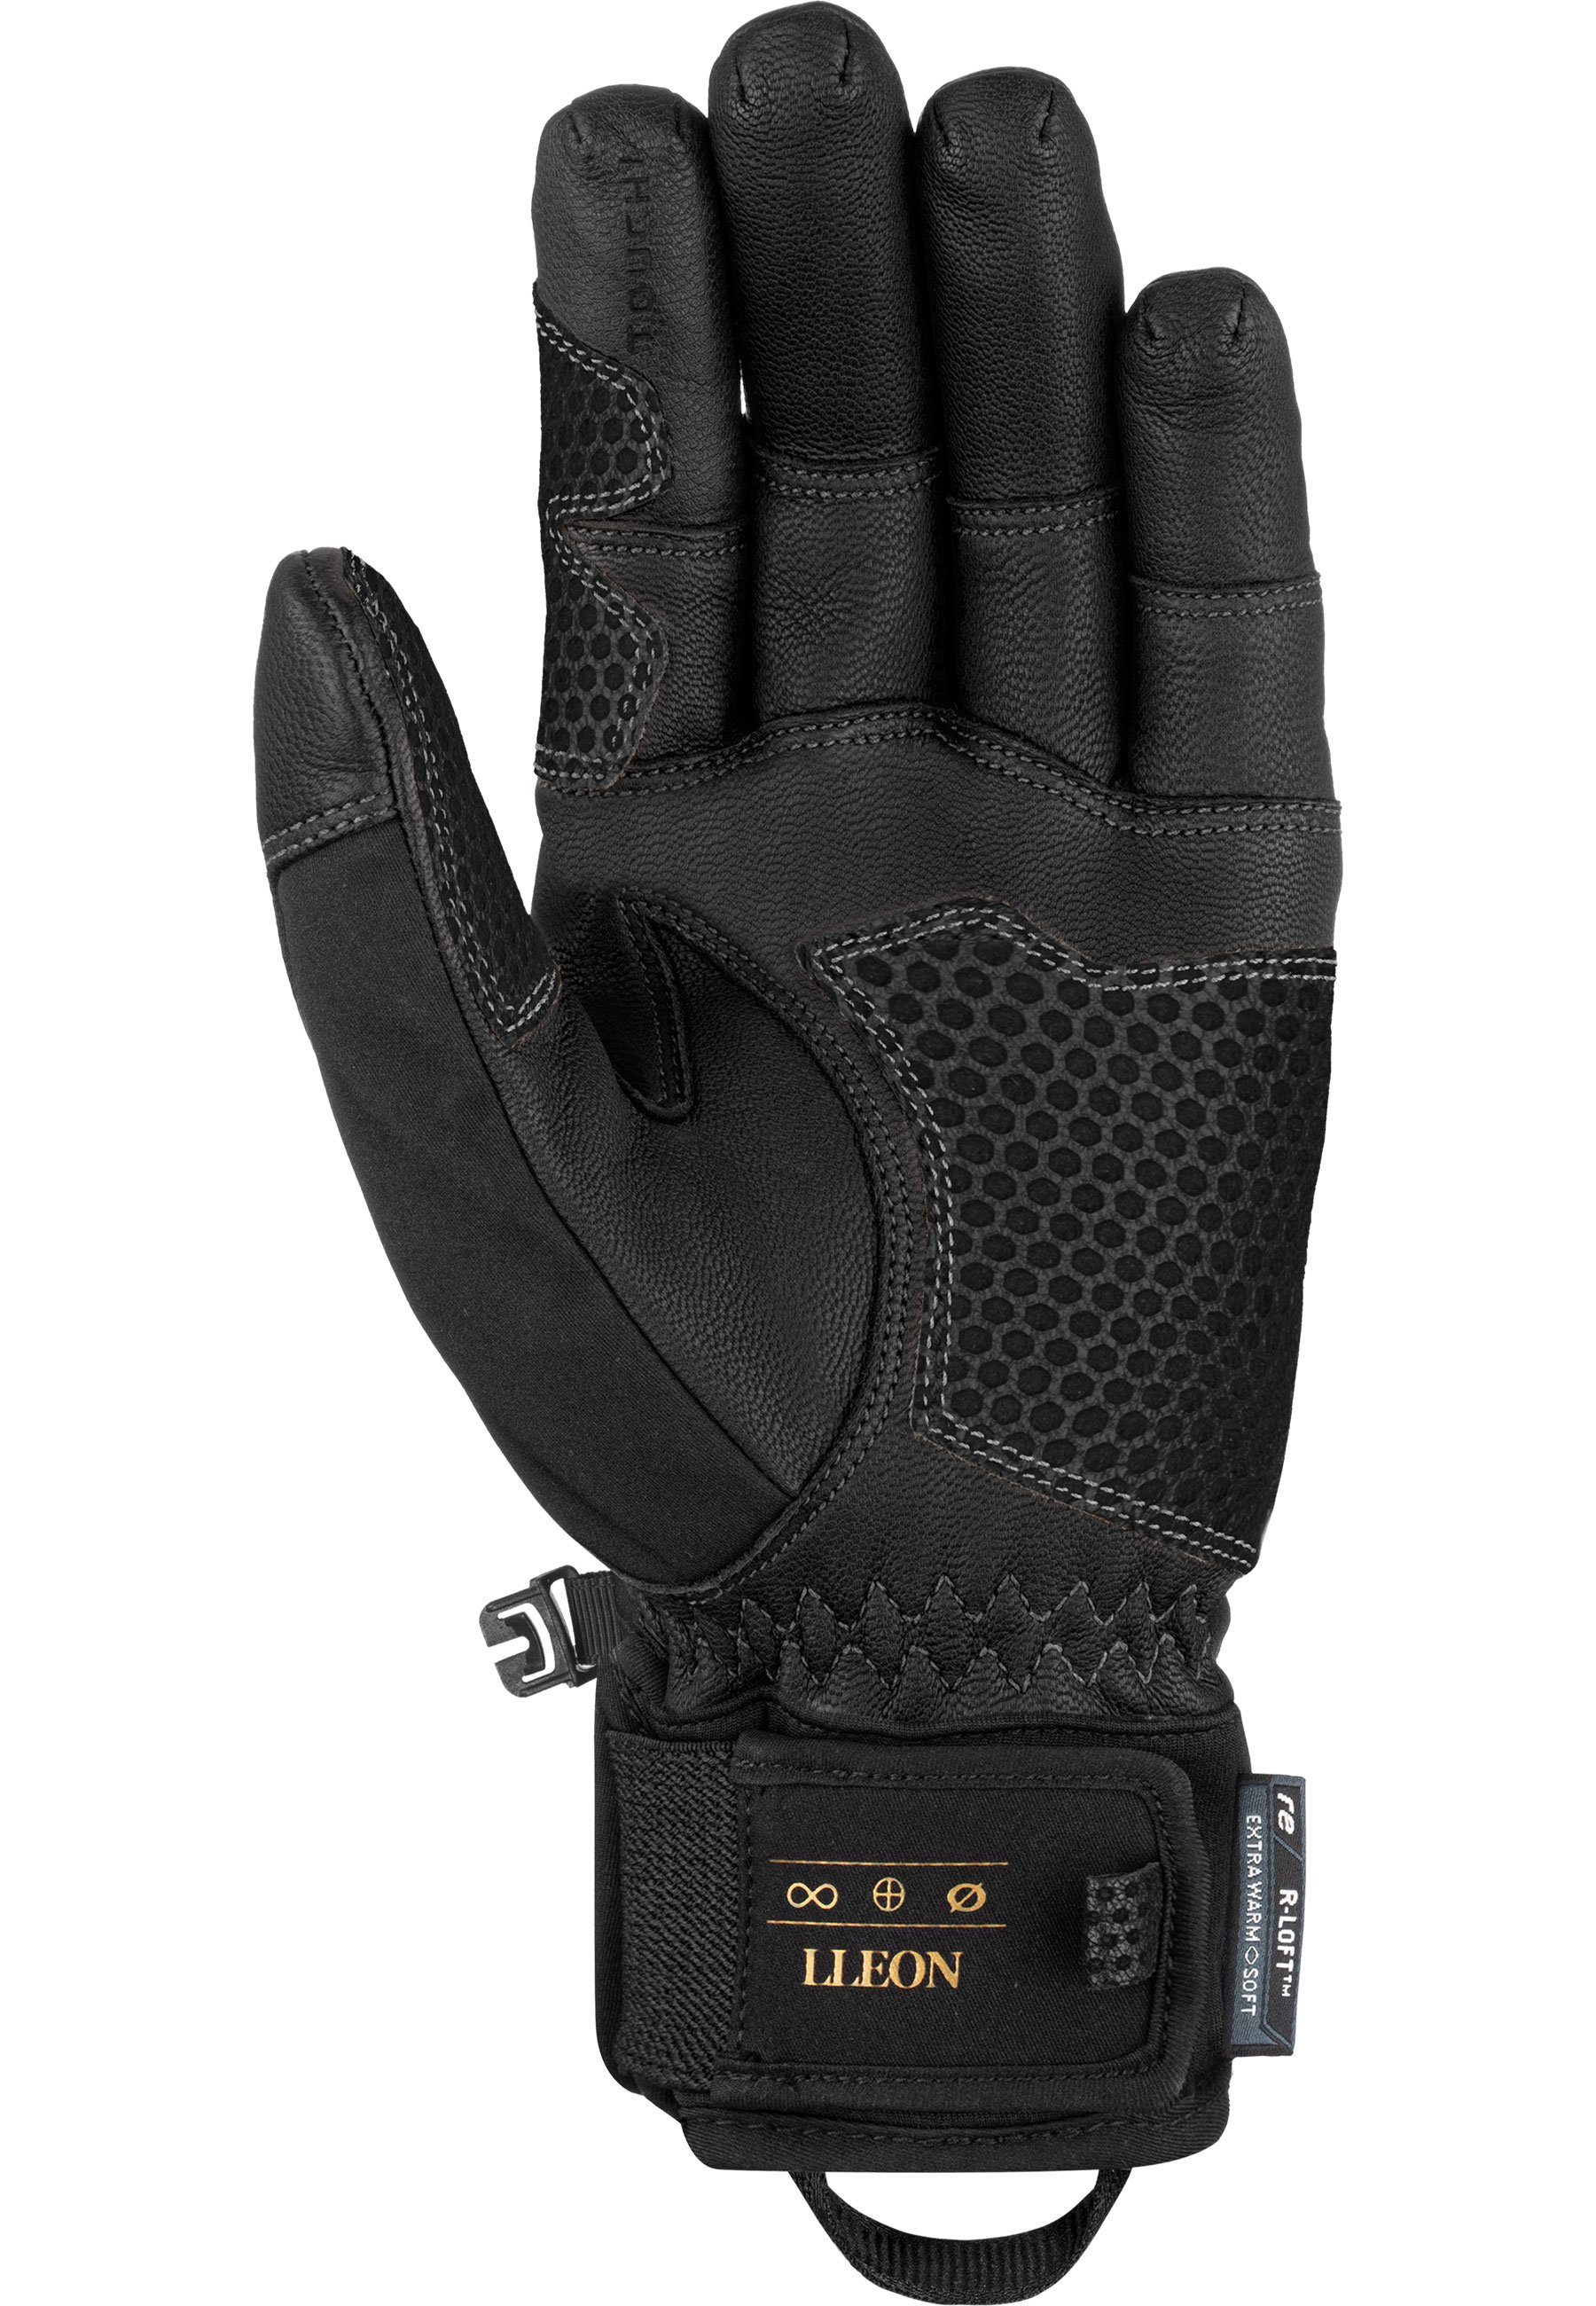 schwarz-goldfarben Skihandschuhe XT mit Lleon R-TEX® Touchscreen-Funktion Reusch